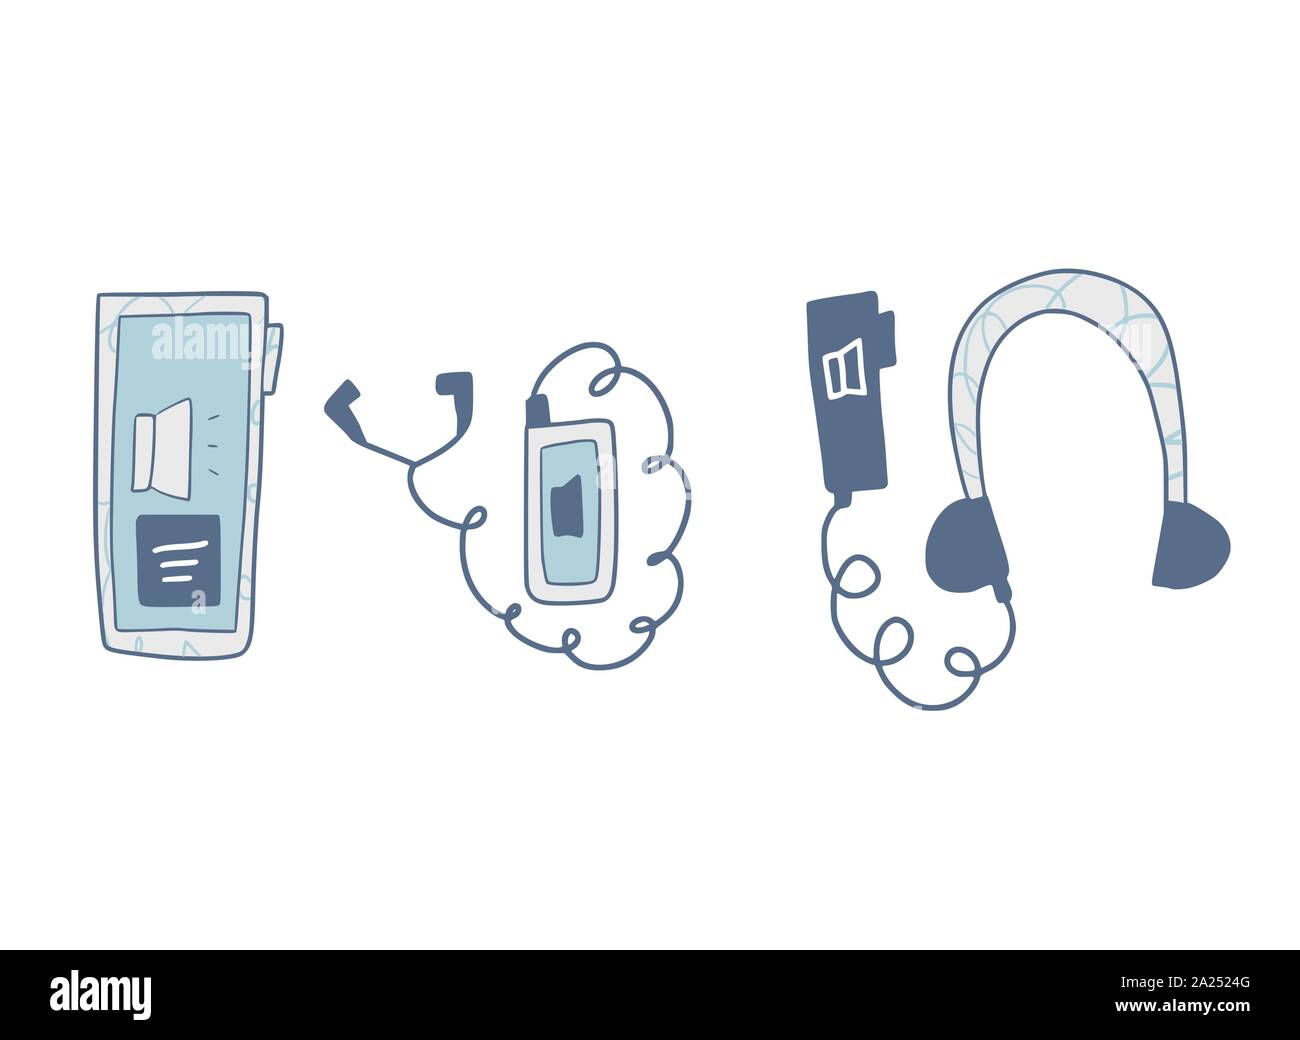 Set di audiolibri in doodle stile. Illustrazione Vettoriale. Illustrazione Vettoriale